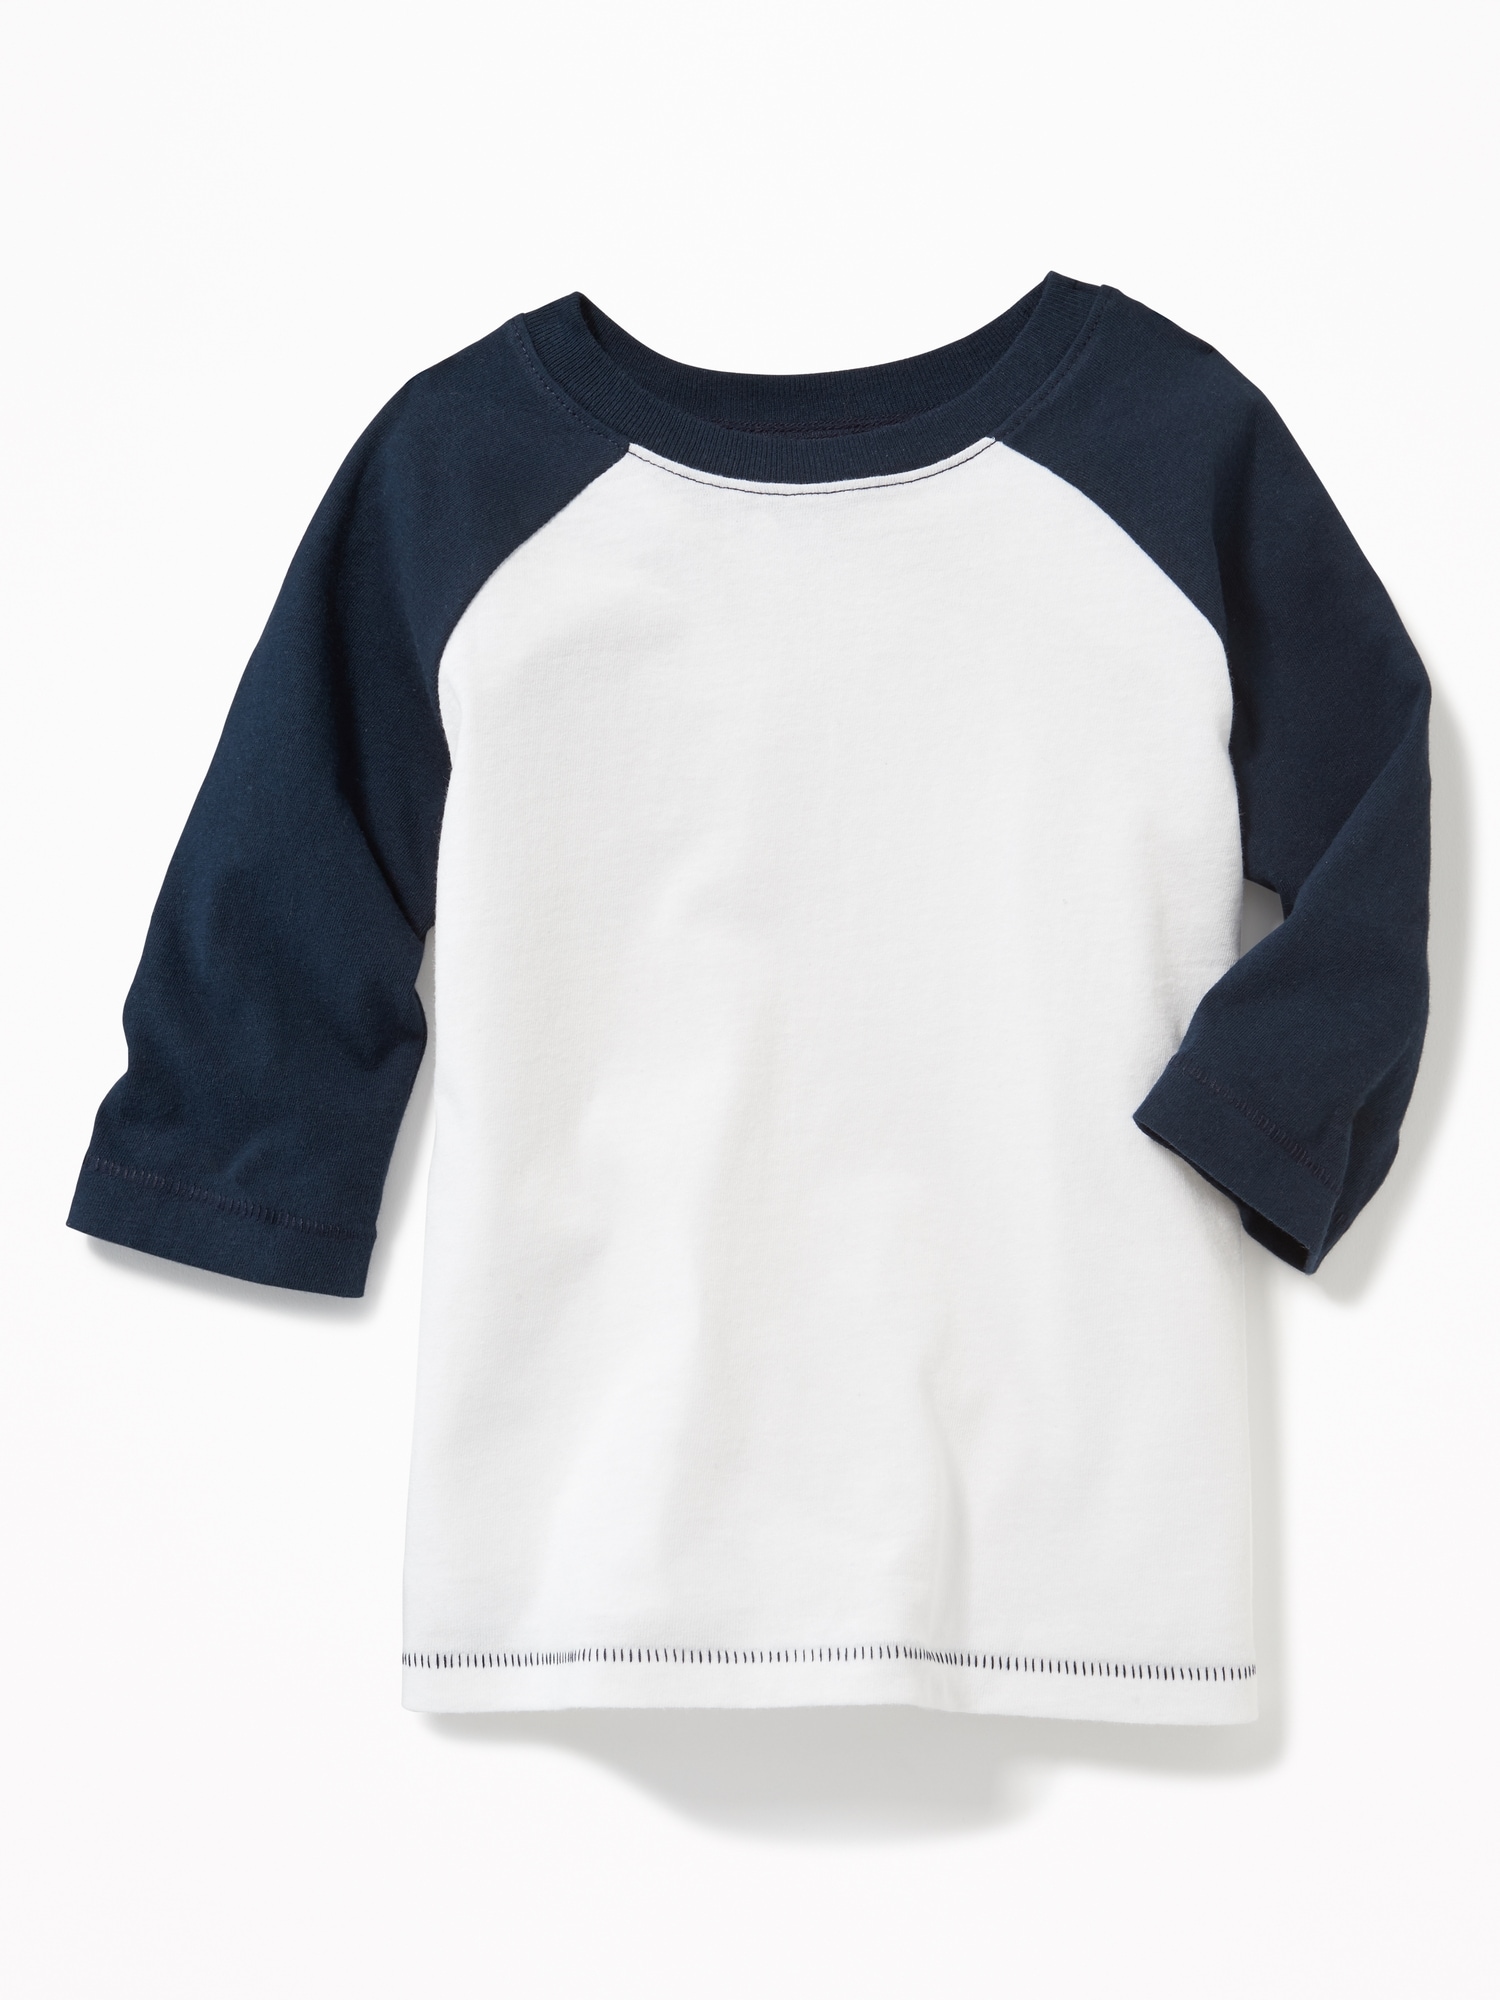 Baby Toddler Long Sleeve Raglan Baseball Soft Cotton T-Shirt Tee Jersey Top 